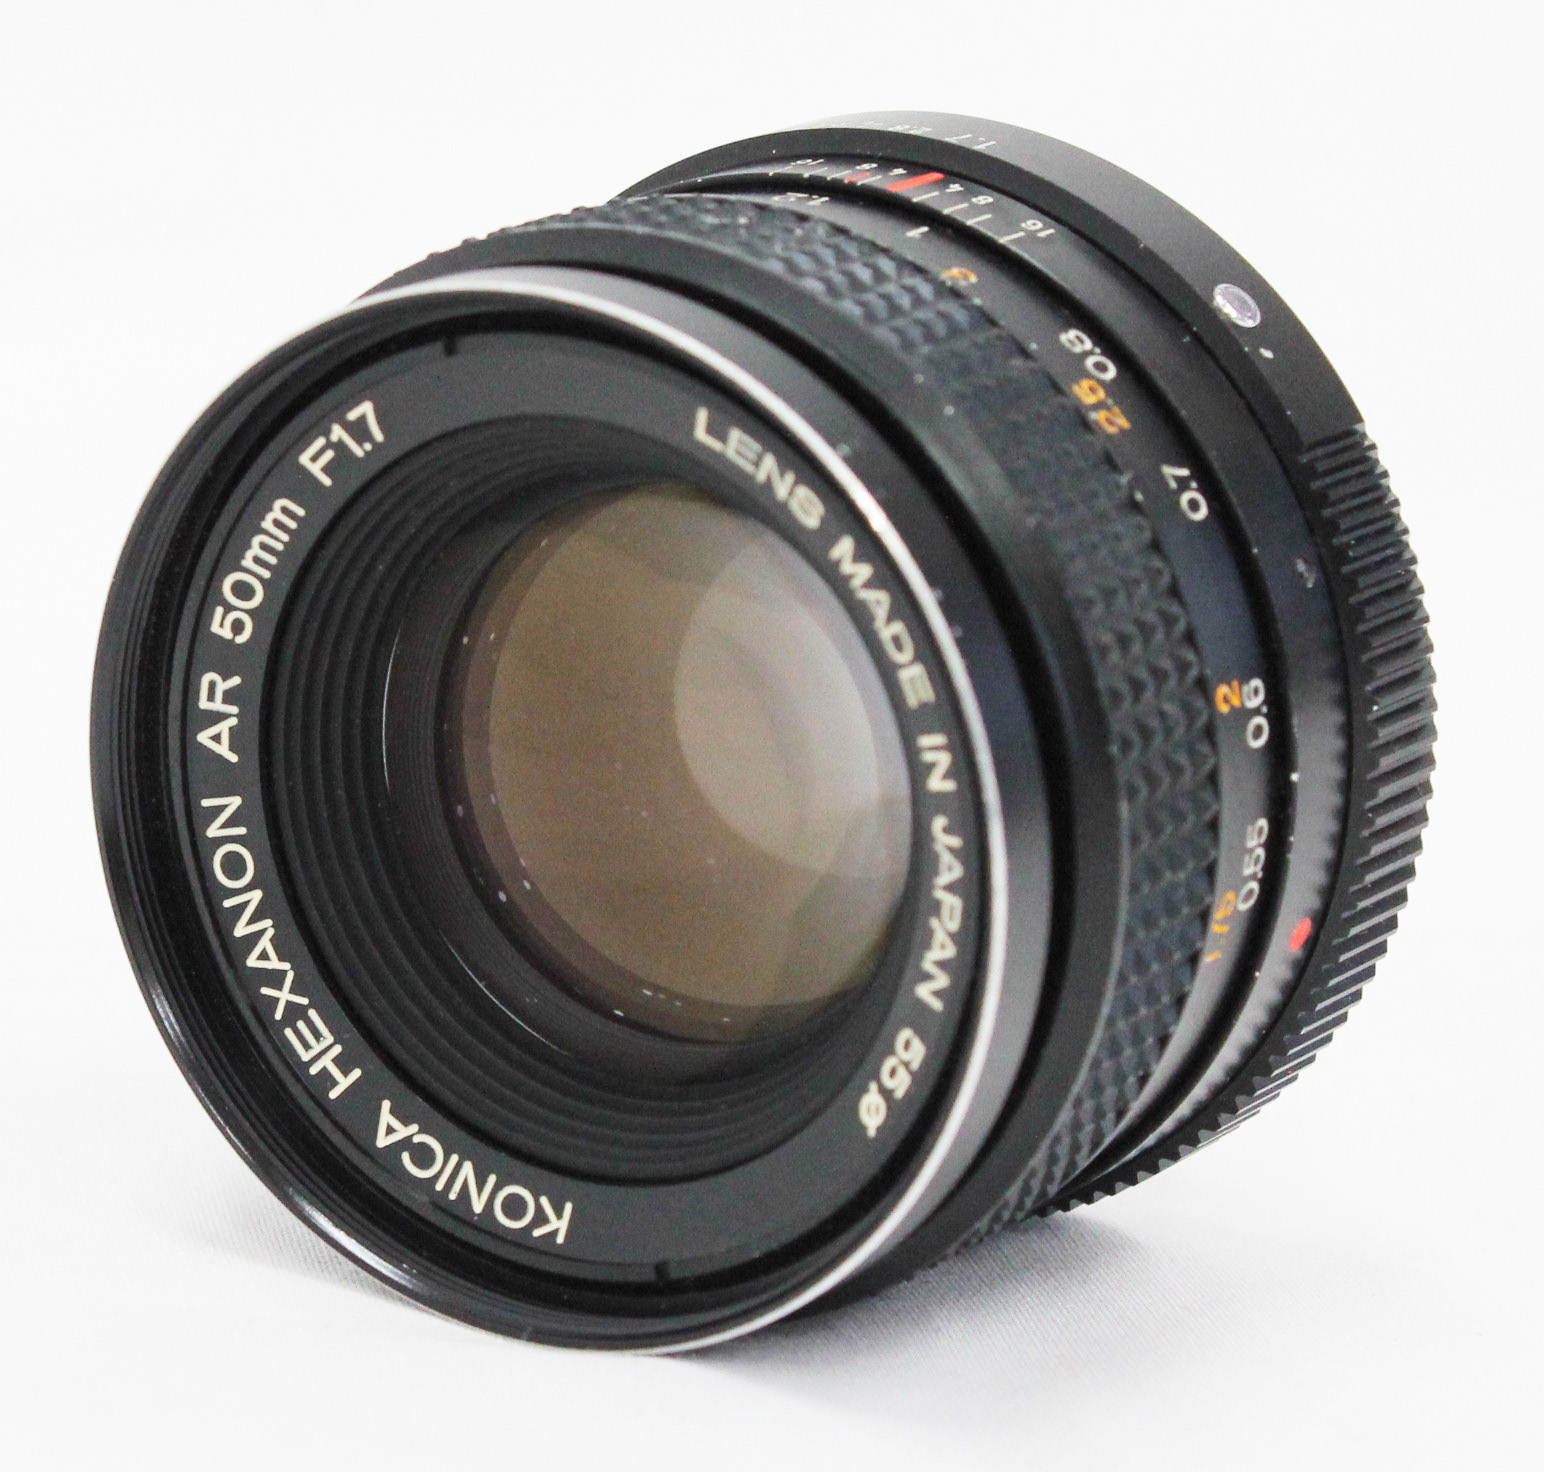  Konica HEXANON AR 50mm F/1.7 MF Lens from Japan Photo 0